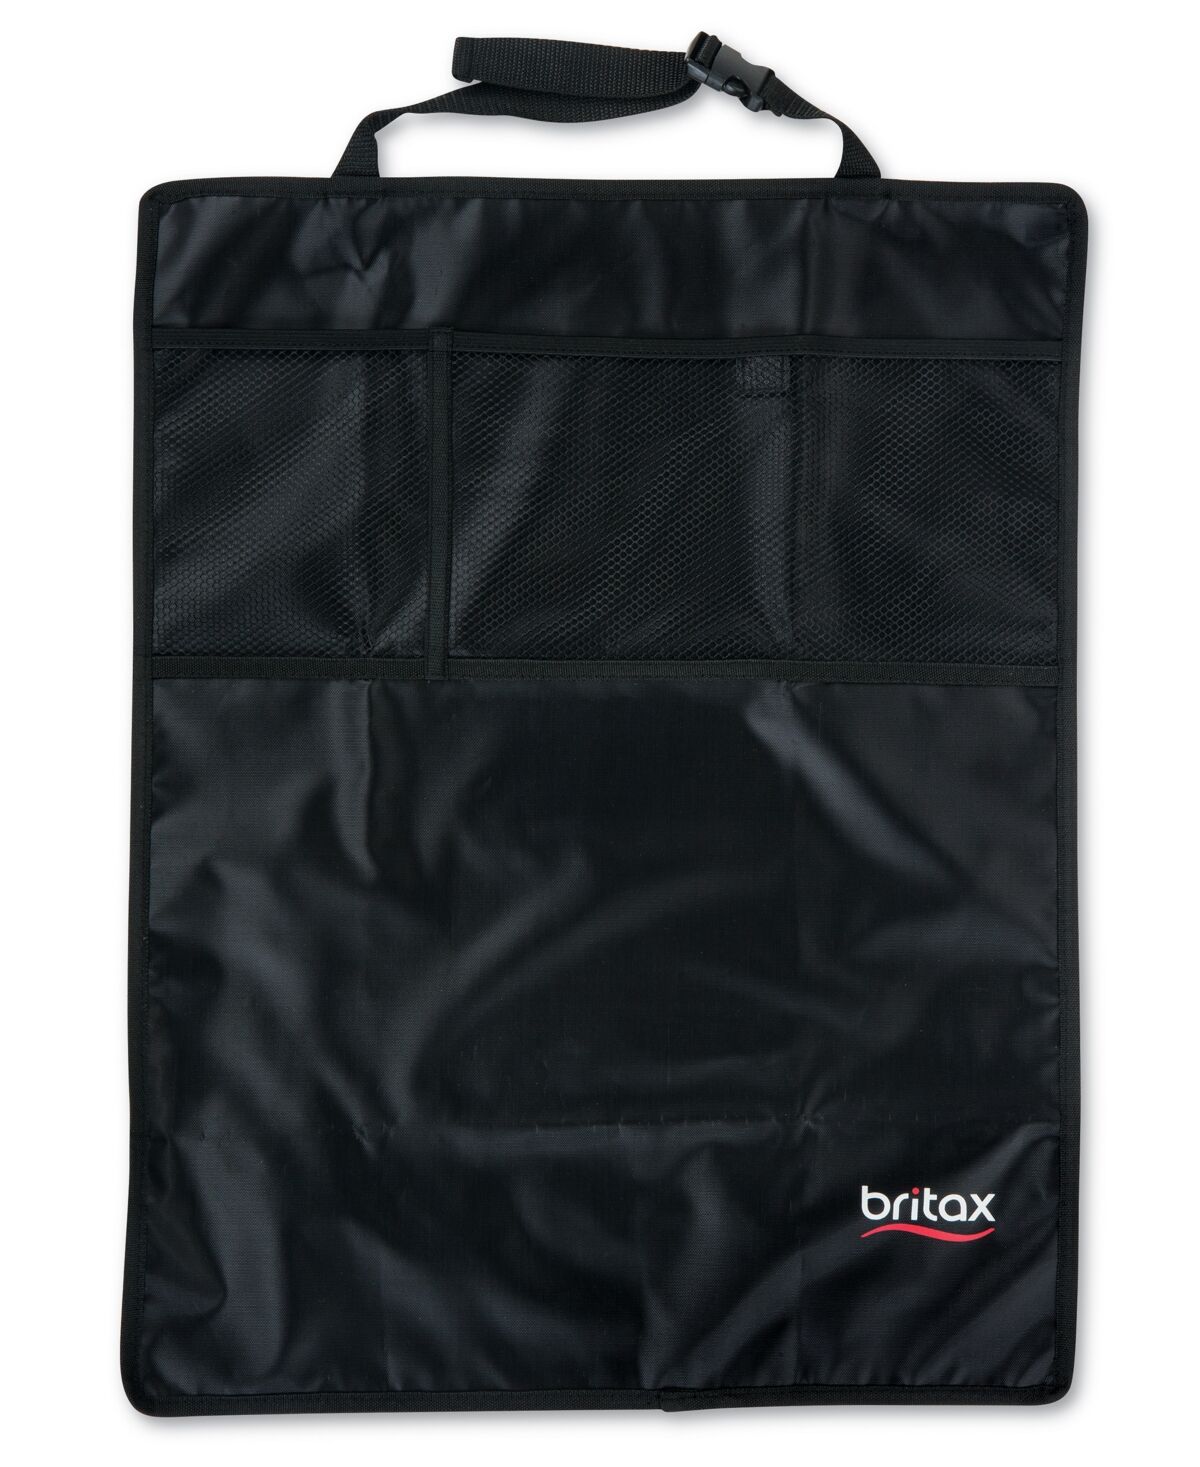 Britax Kick Mats - Unisex - Black - Size: No Size